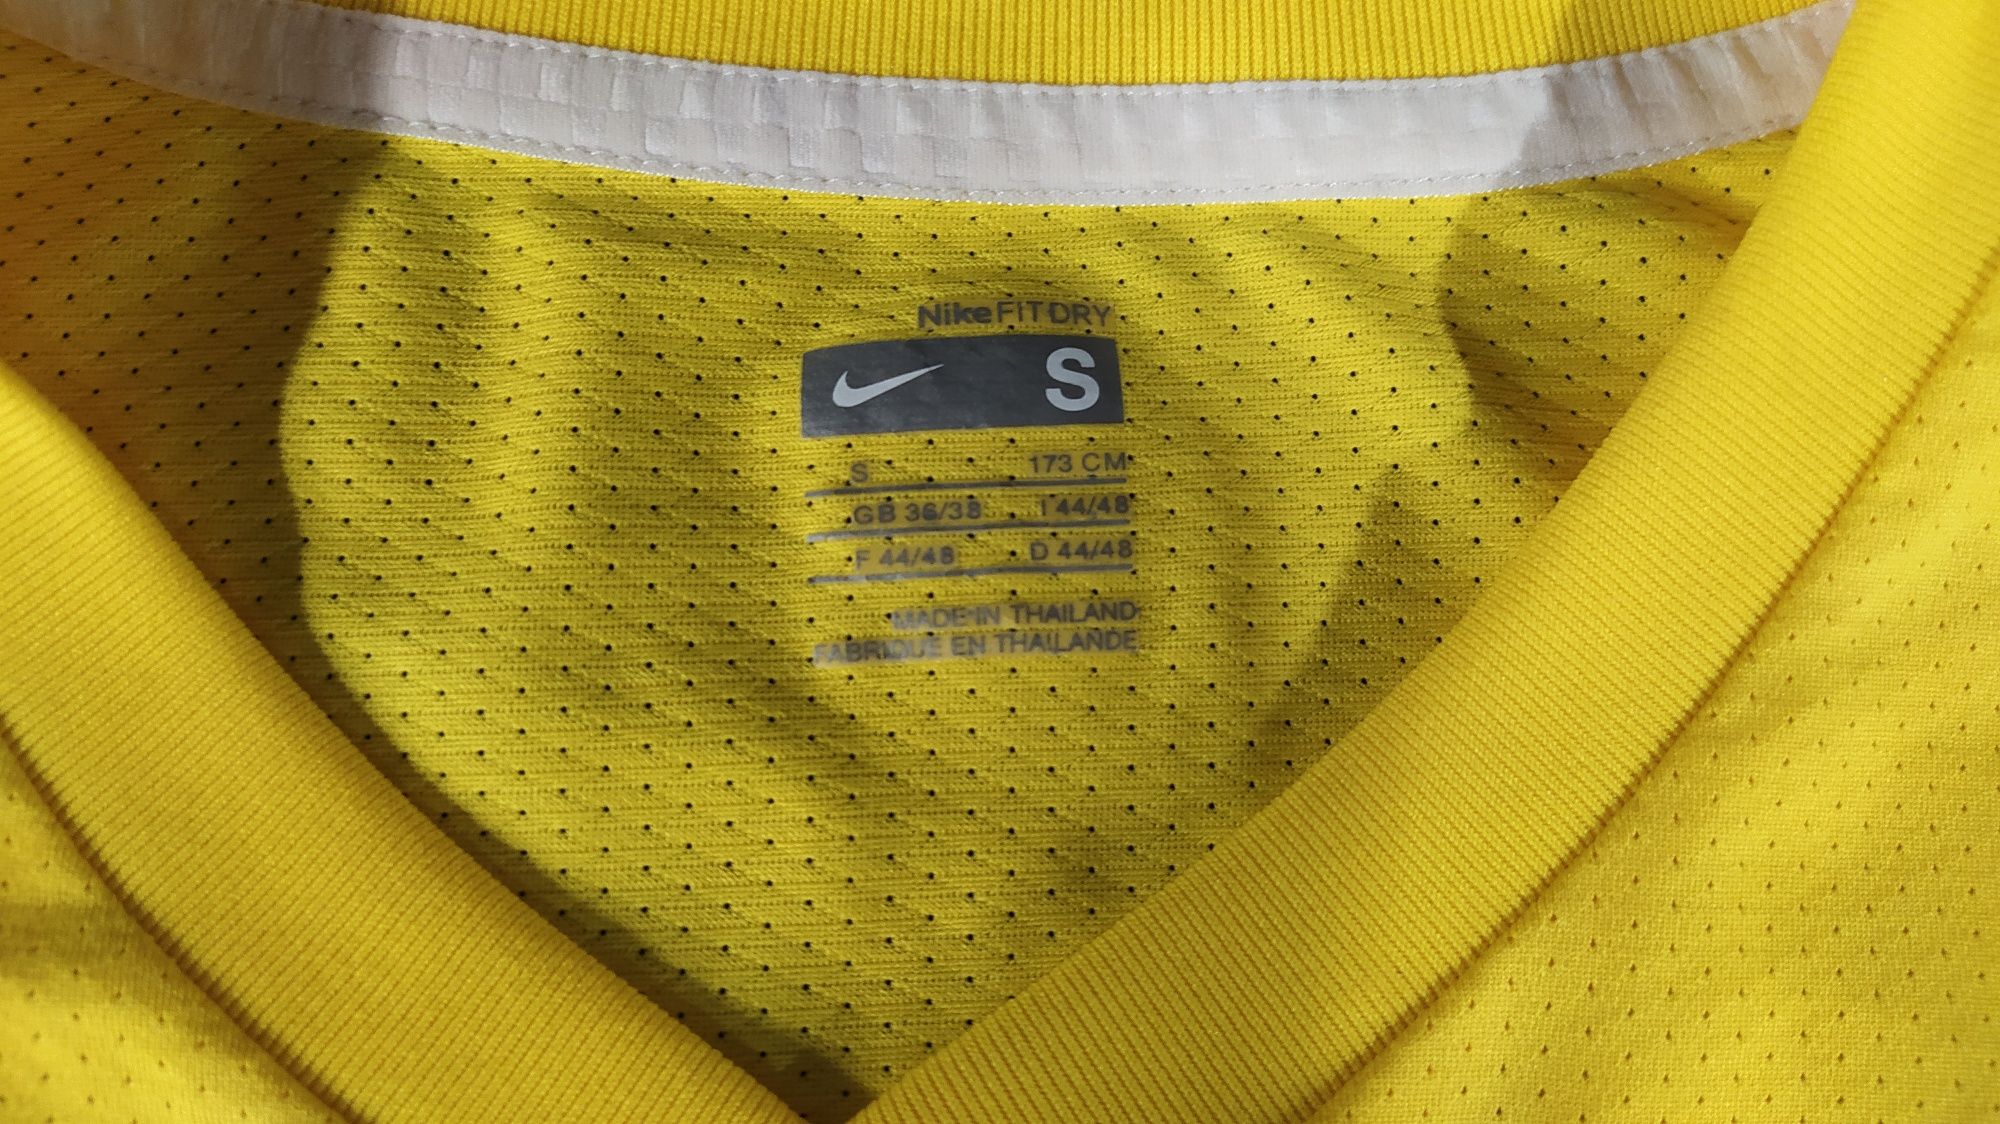 Футболка Nike FitDry размер S оригинал made in Thailand